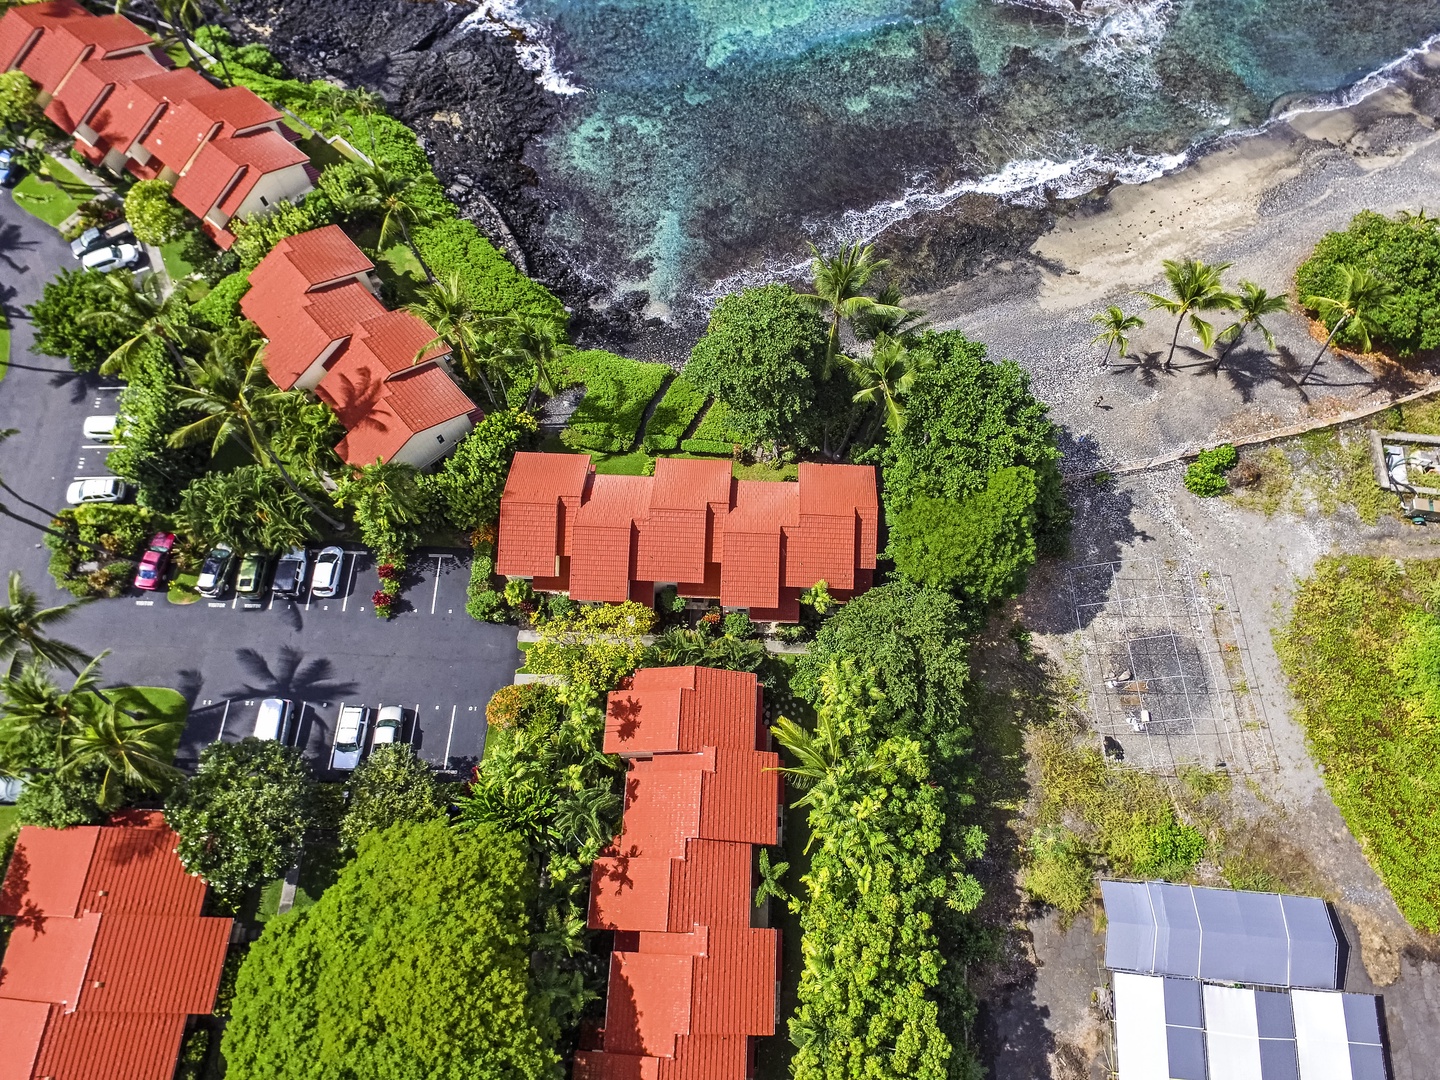 Kailua Kona Vacation Rentals, Keauhou Kona Surf & Racquet 2101 - Aerial view of the condo